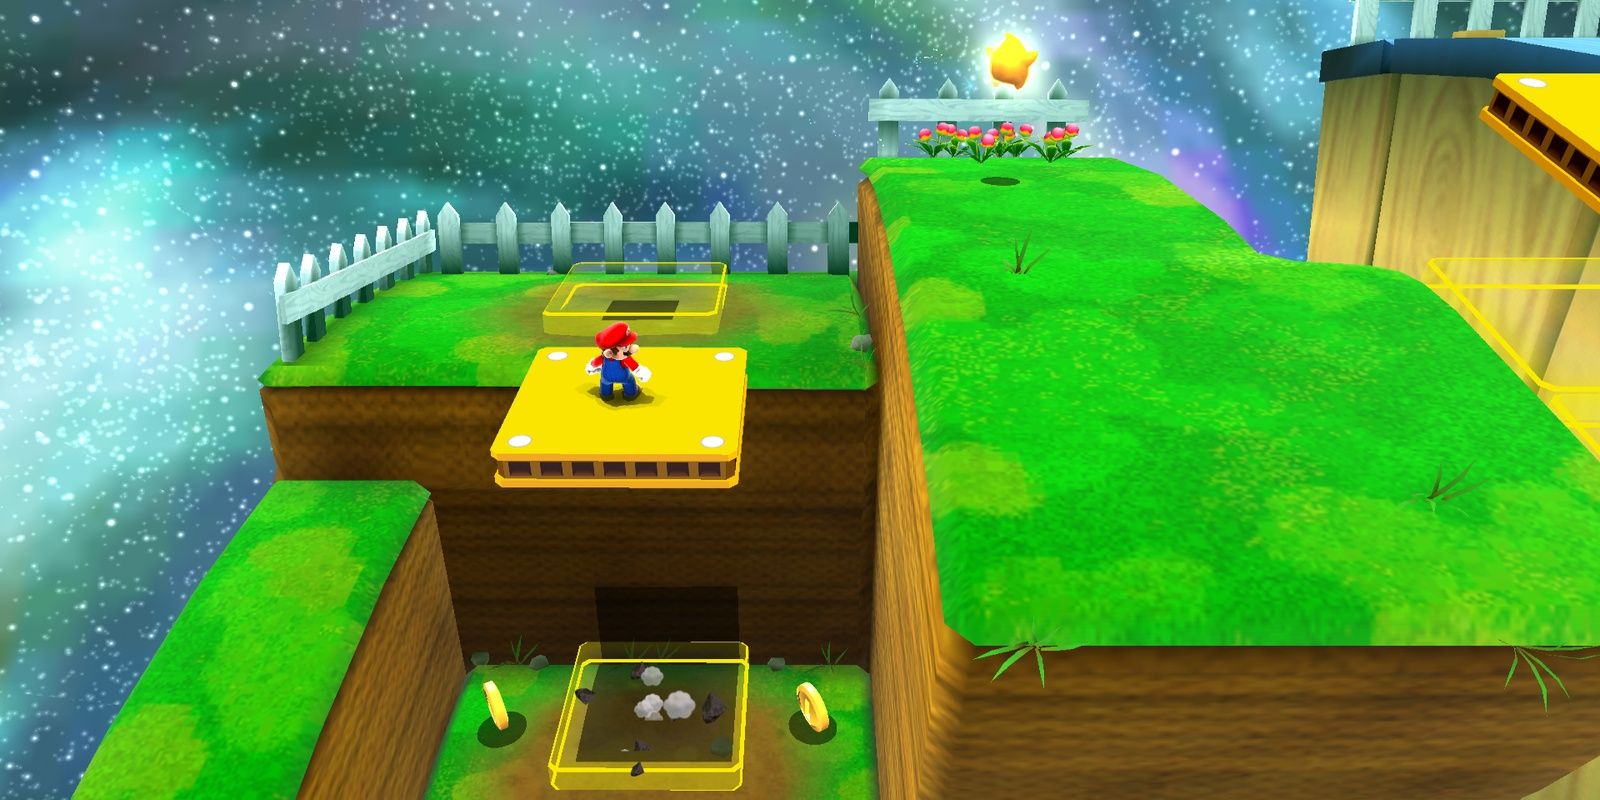 Sky Station Galaxy in Super Mario Galaxy 2